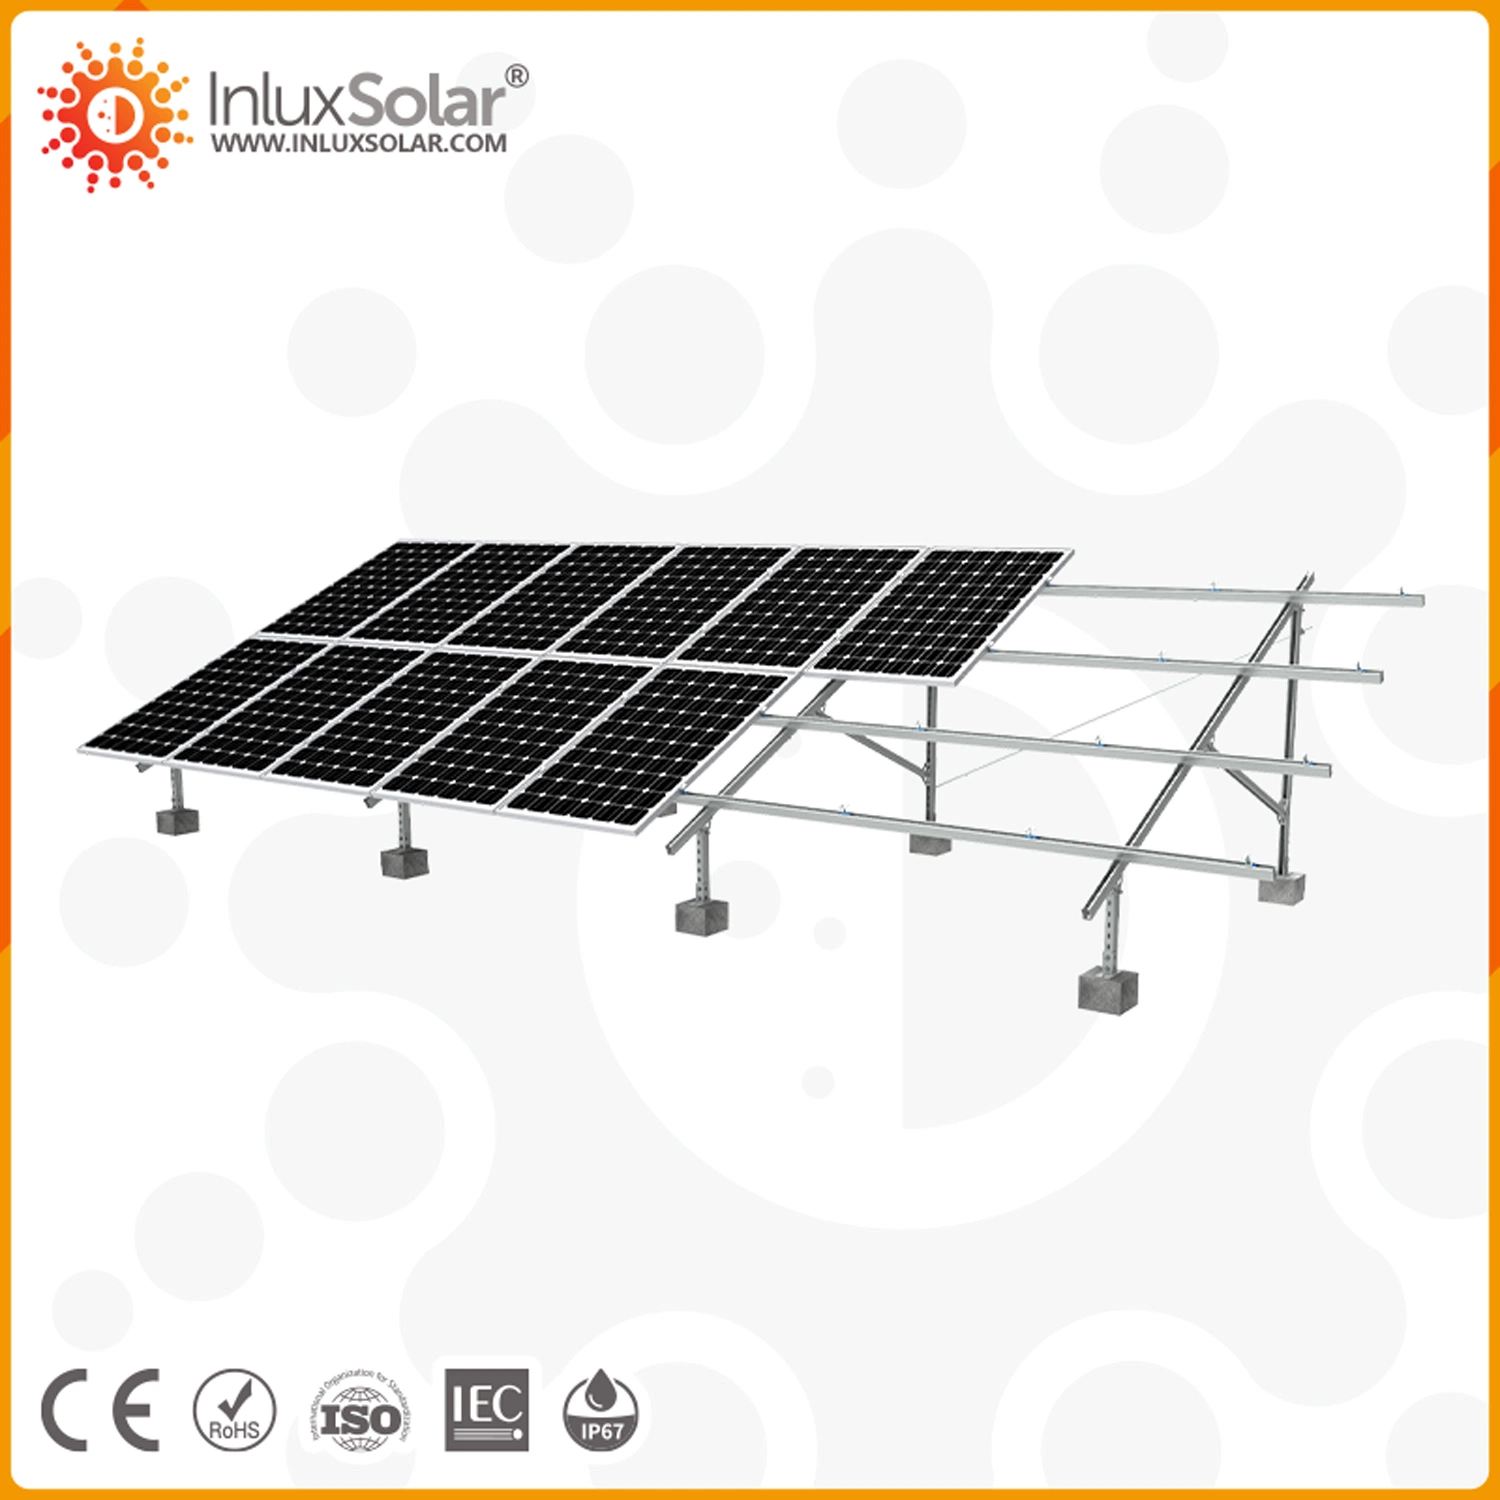 5kw 10kw 15kw 20kw 30kw Inversor Solar Híbrido On/Off Grid Painéis Fotovoltaicos Sistema de Armazenamento de Energia Residencial Gerador de Energia Módulo Kit com Bateria de Lítio